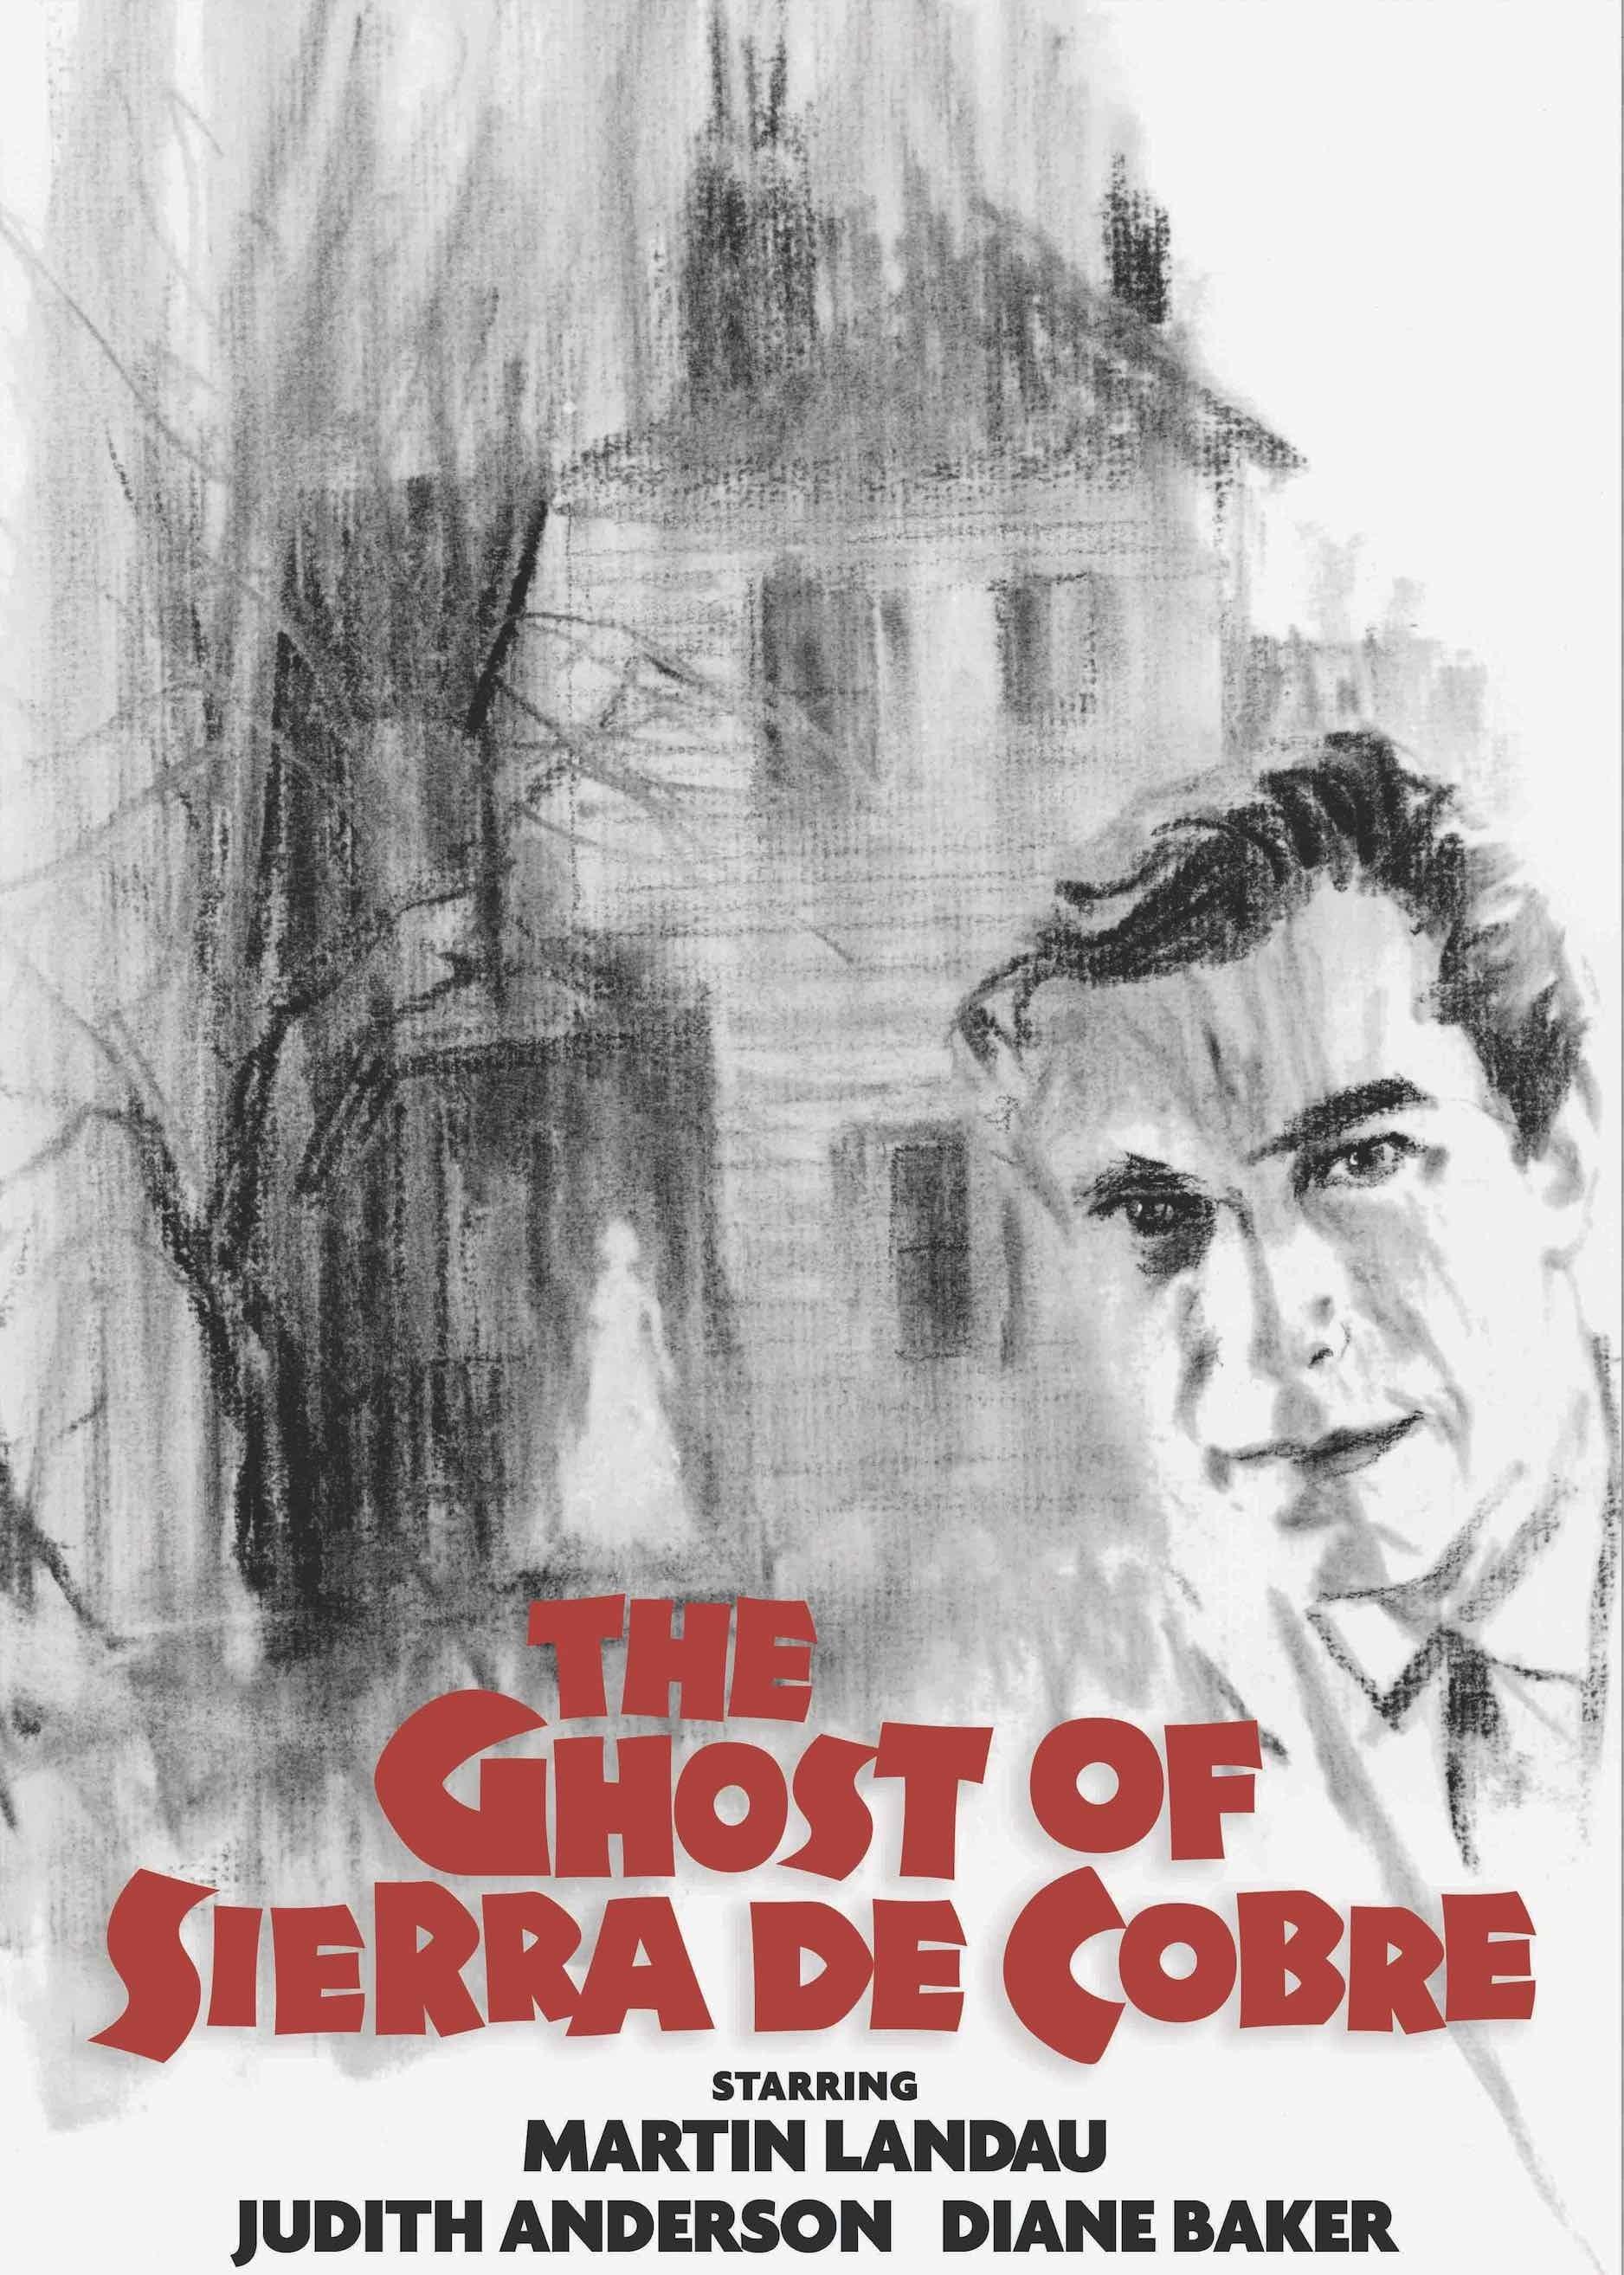 The Ghost of Sierra de Cobre poster